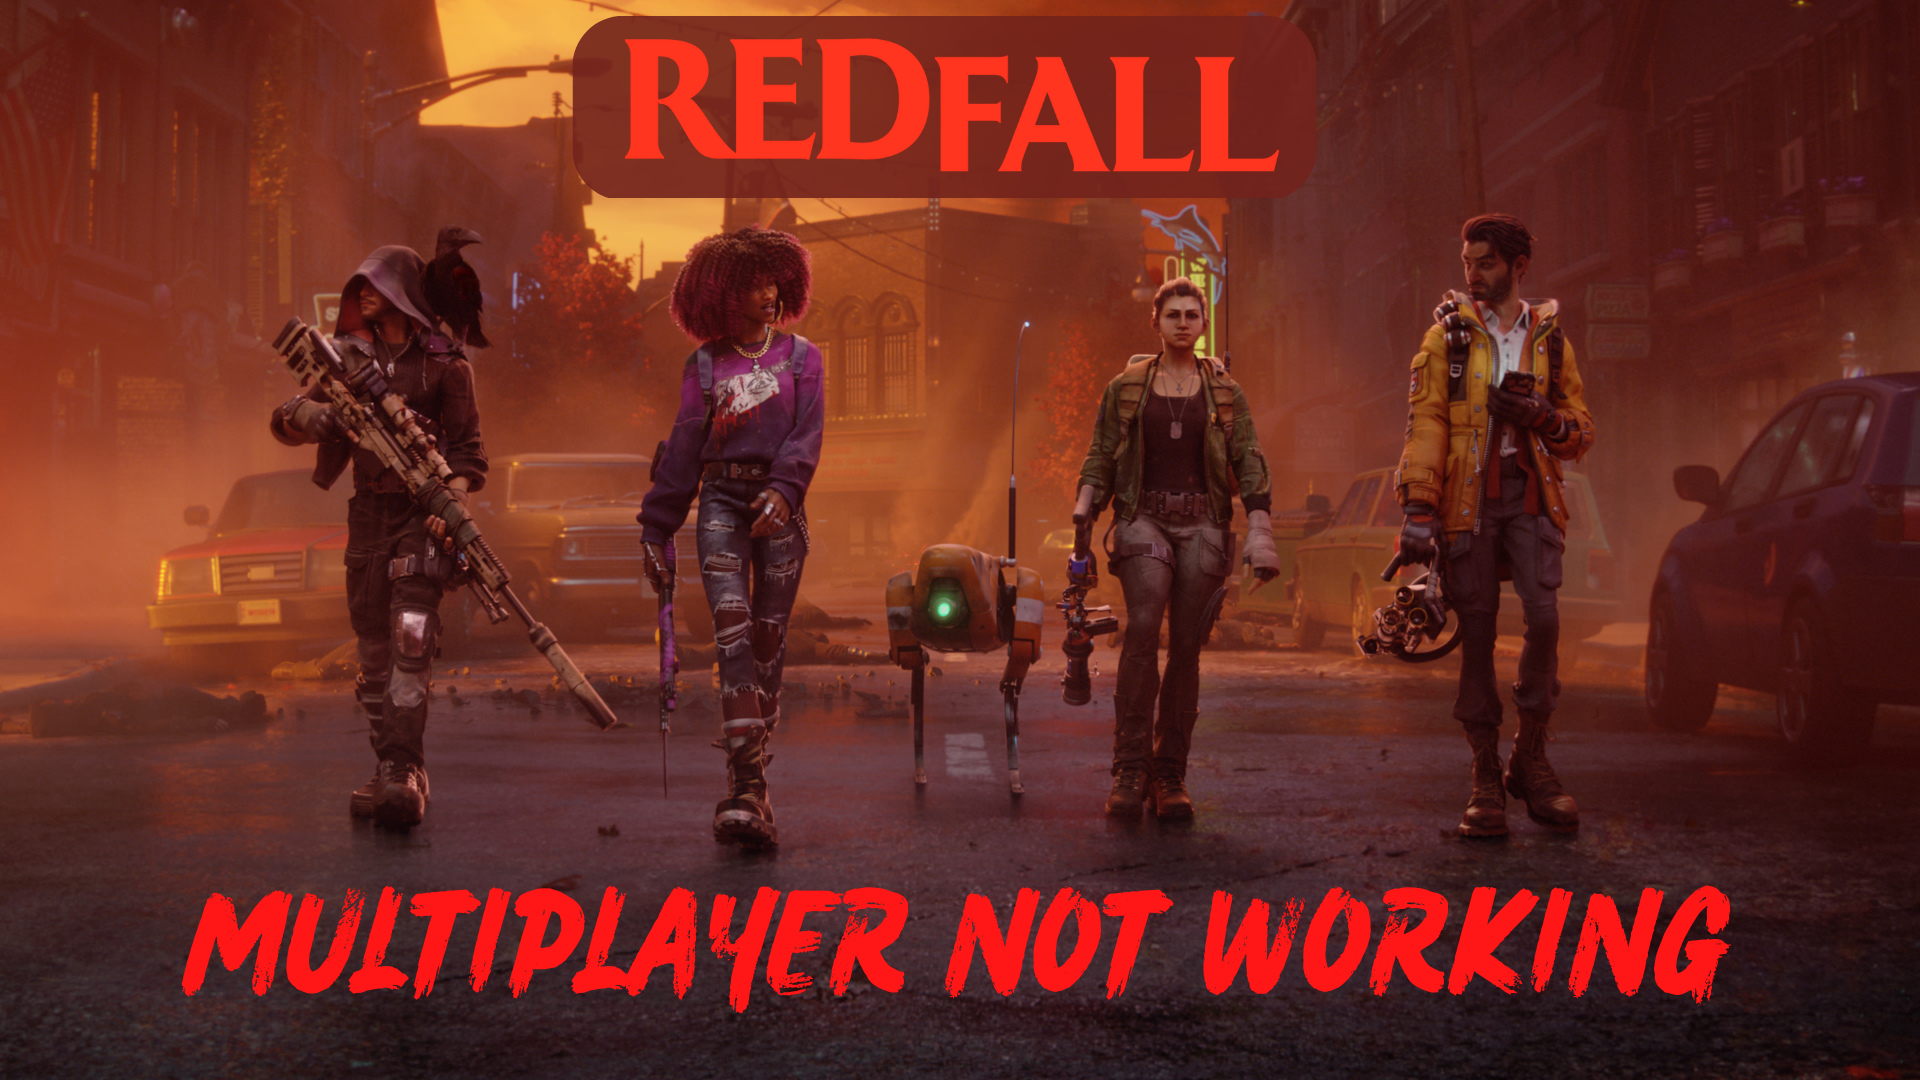 RedFall Multiplayer Not Working